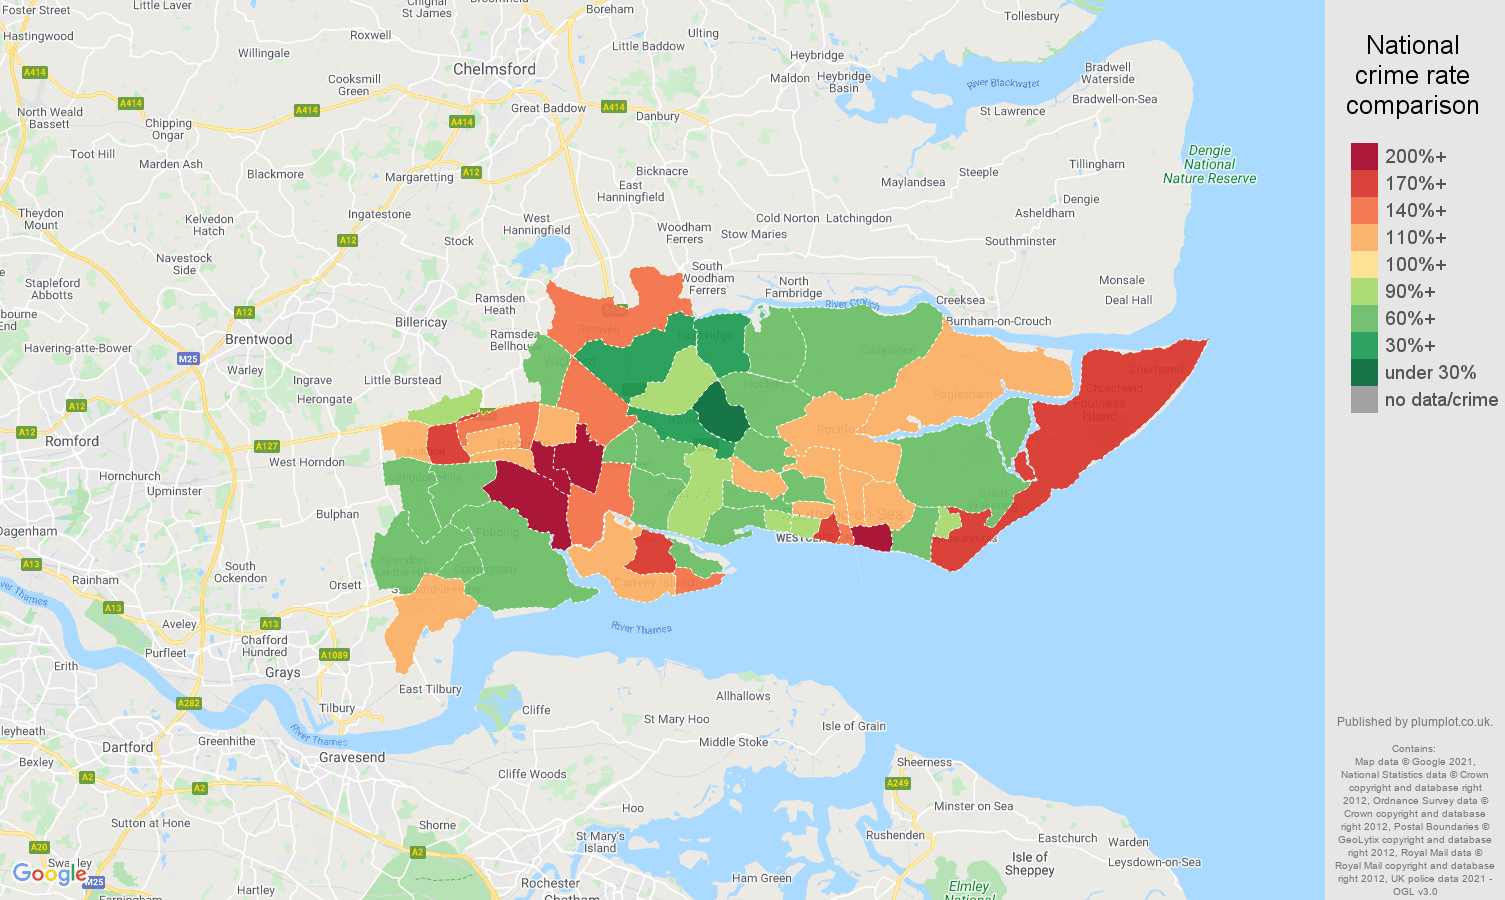 Southend on Sea criminal damage and arson crime rate comparison map